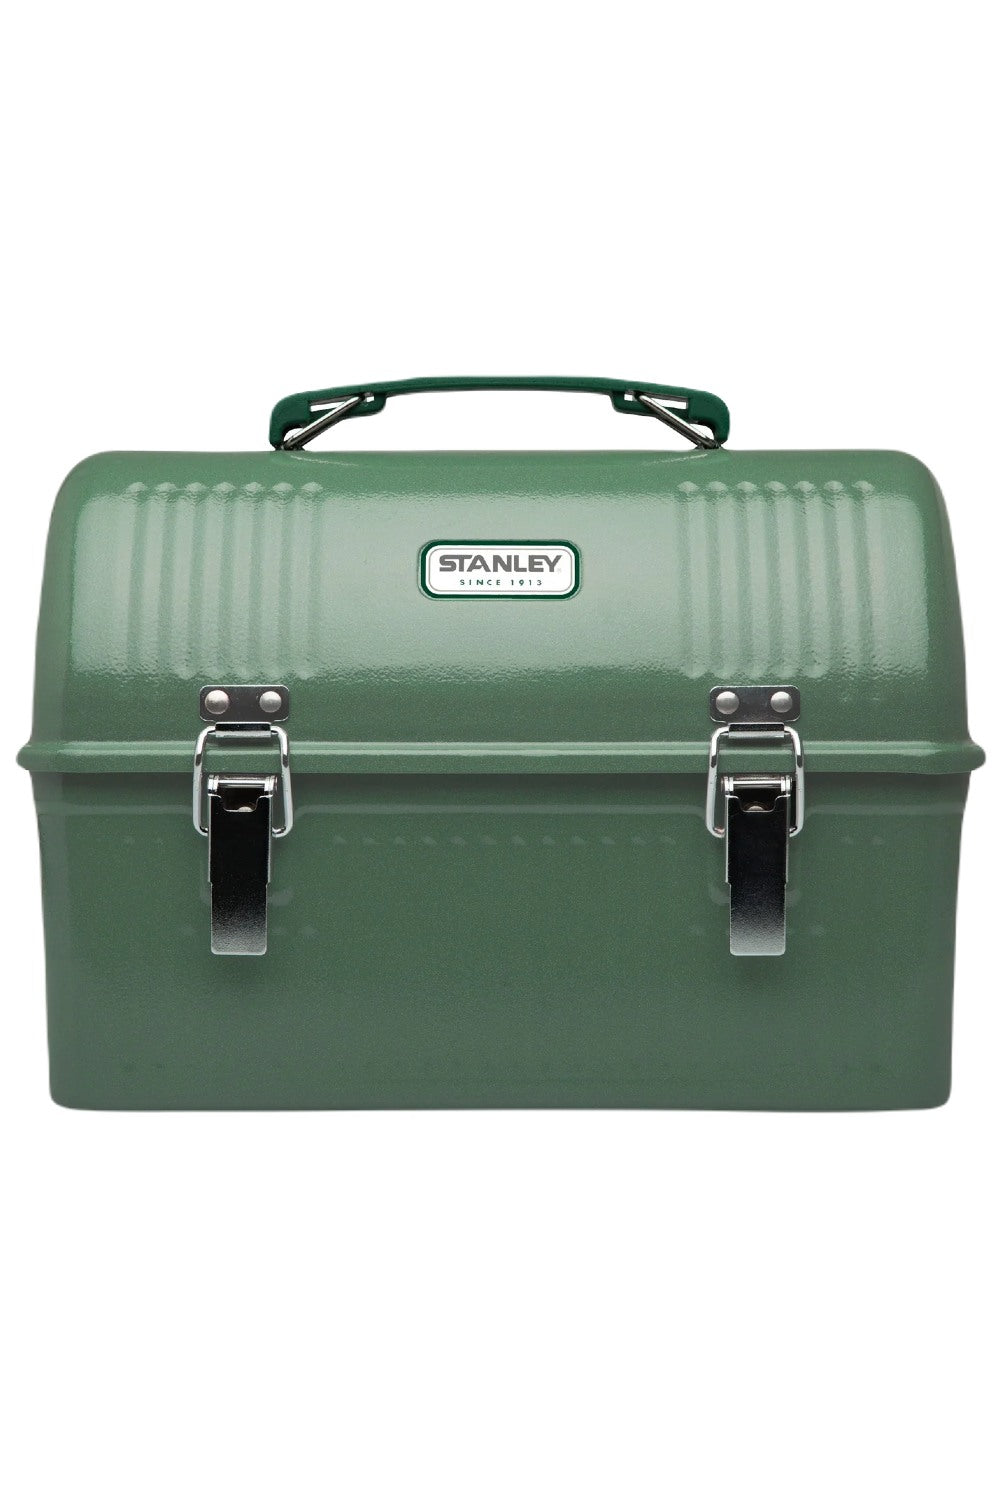 Stanley Legendary Classic Lunch Box 9.5L